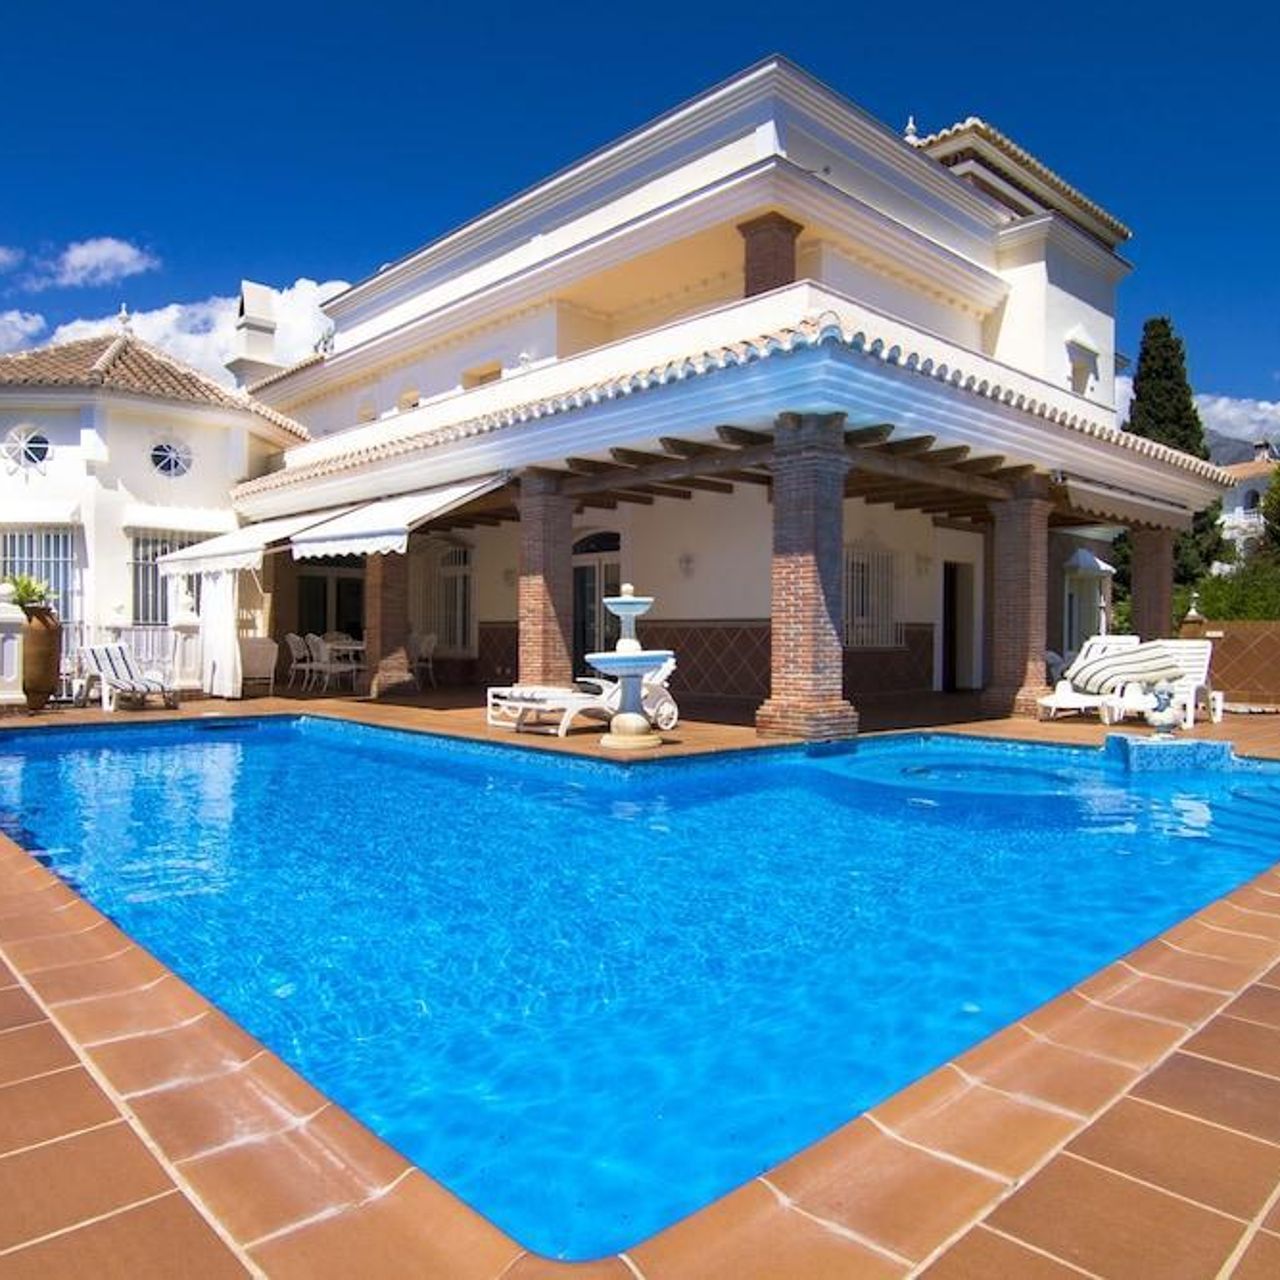 Hotel Villa Pergola Luxury B&B - Nerja chez HRS avec services gratuits